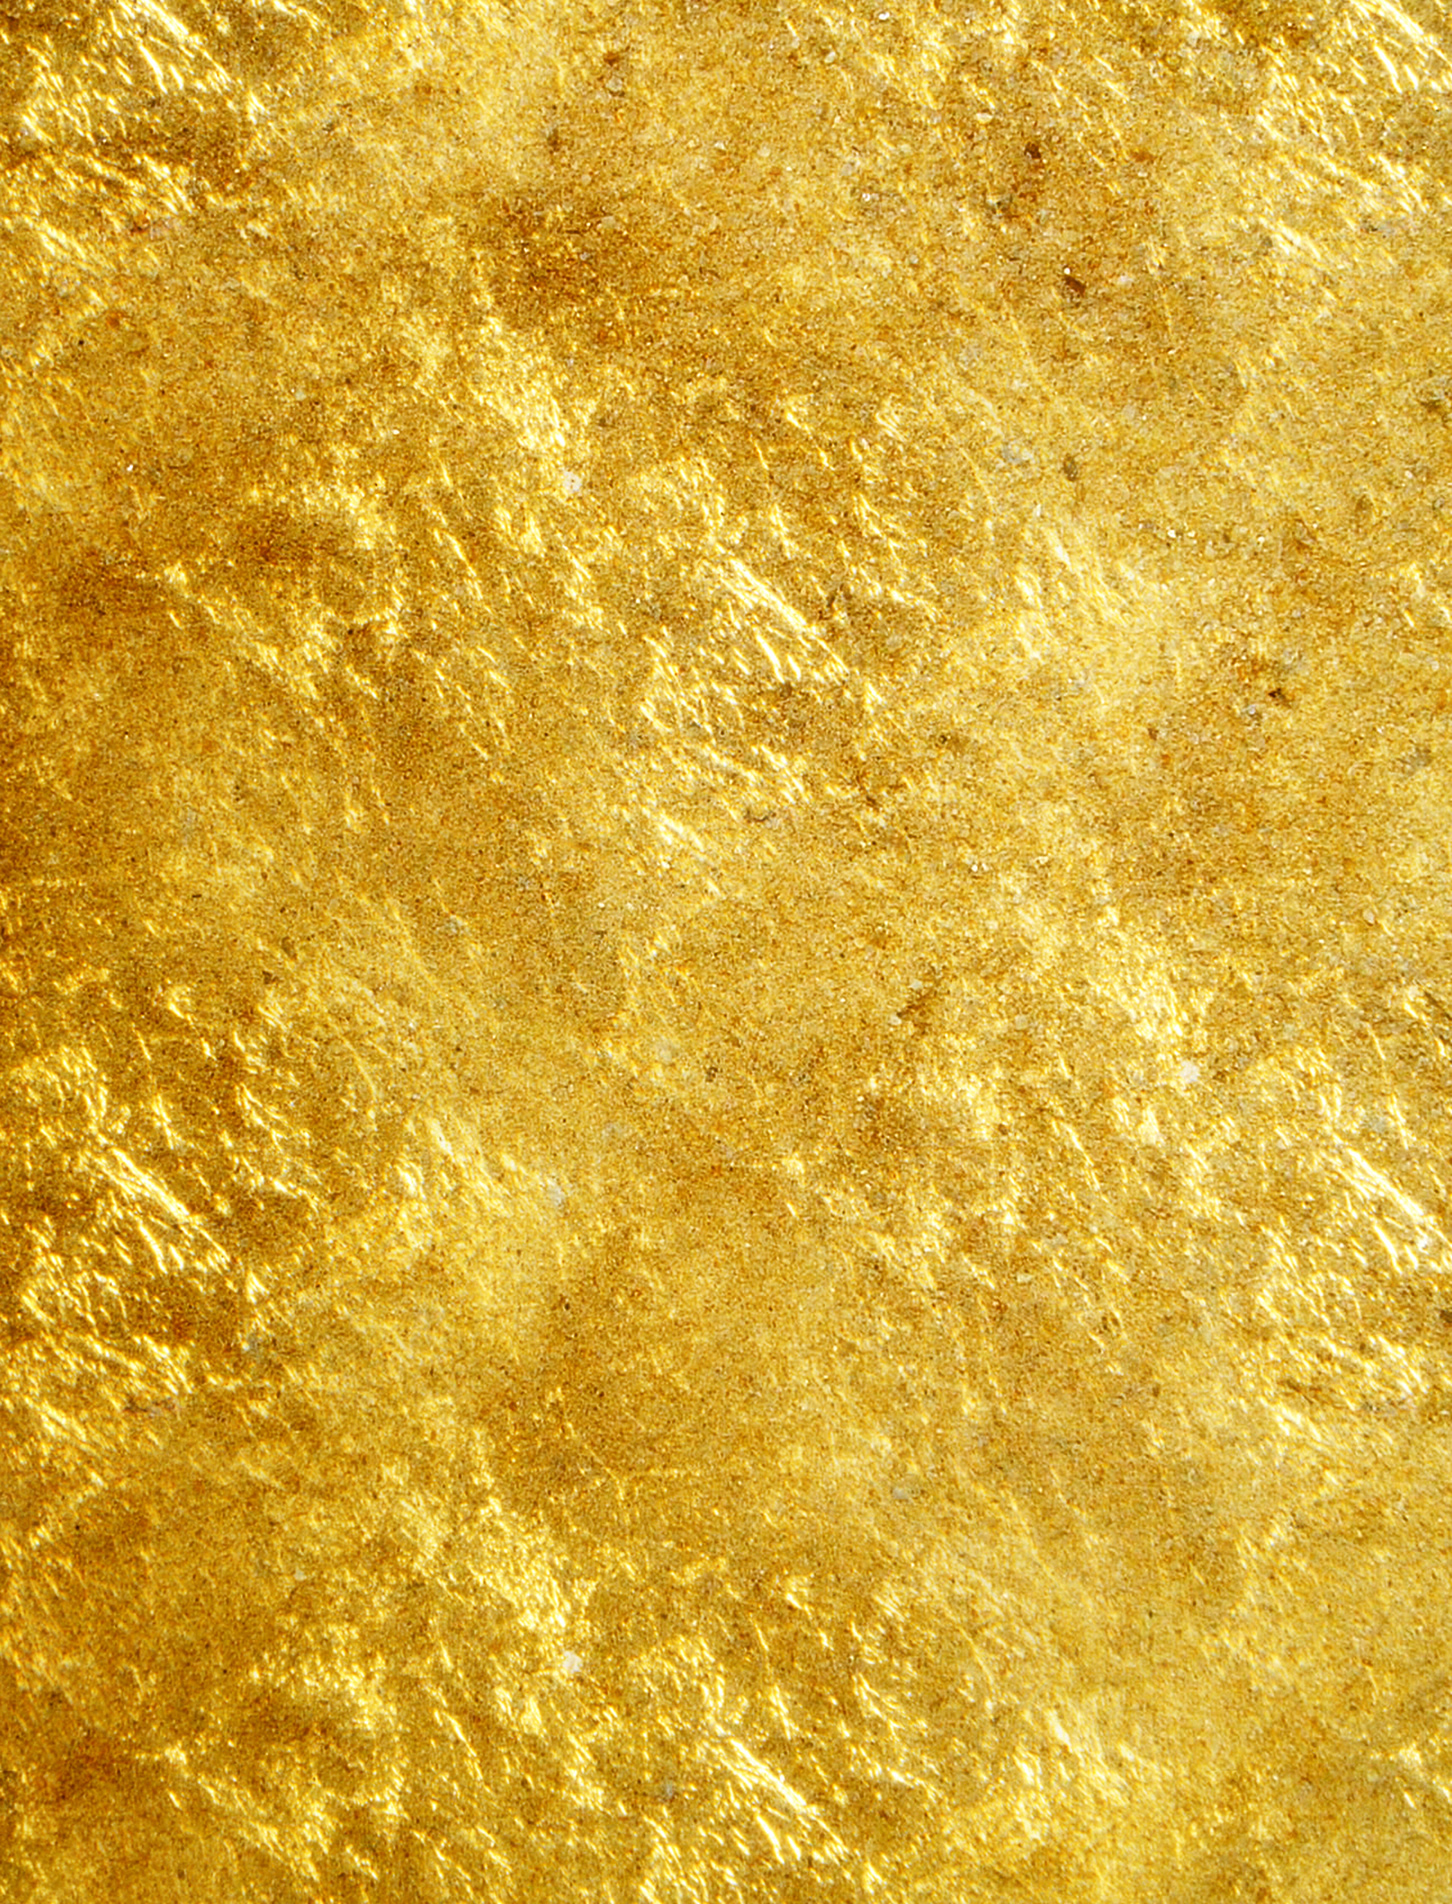 Gold background,download photo, desktop wallpapers, texture gold